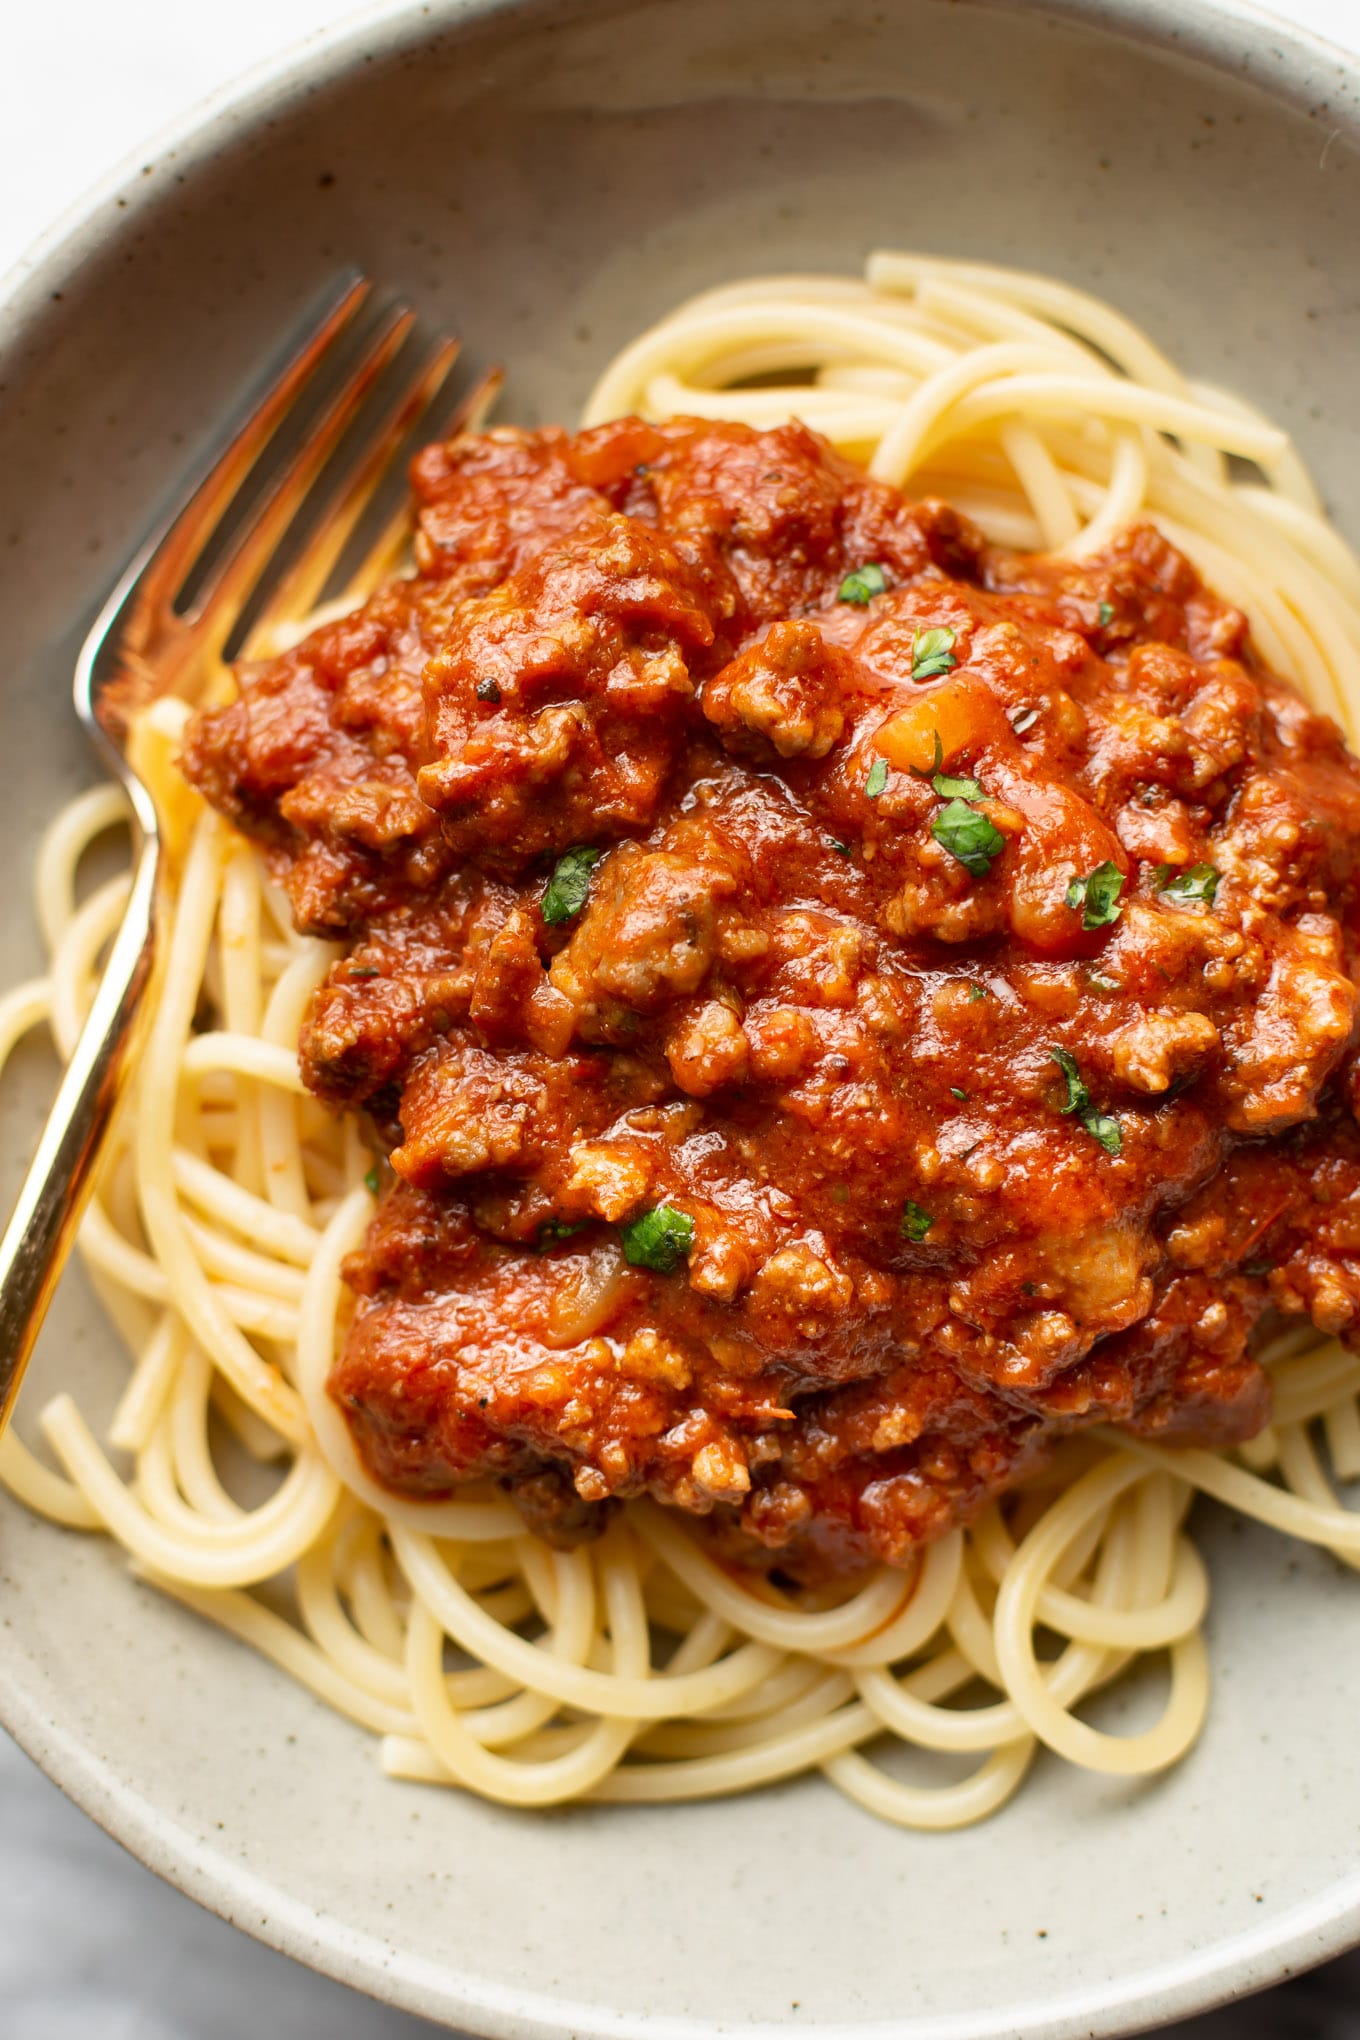 https://www.saltandlavender.com/wp-content/uploads/2022/04/meat-sauce-for-spaghetti-1.jpg